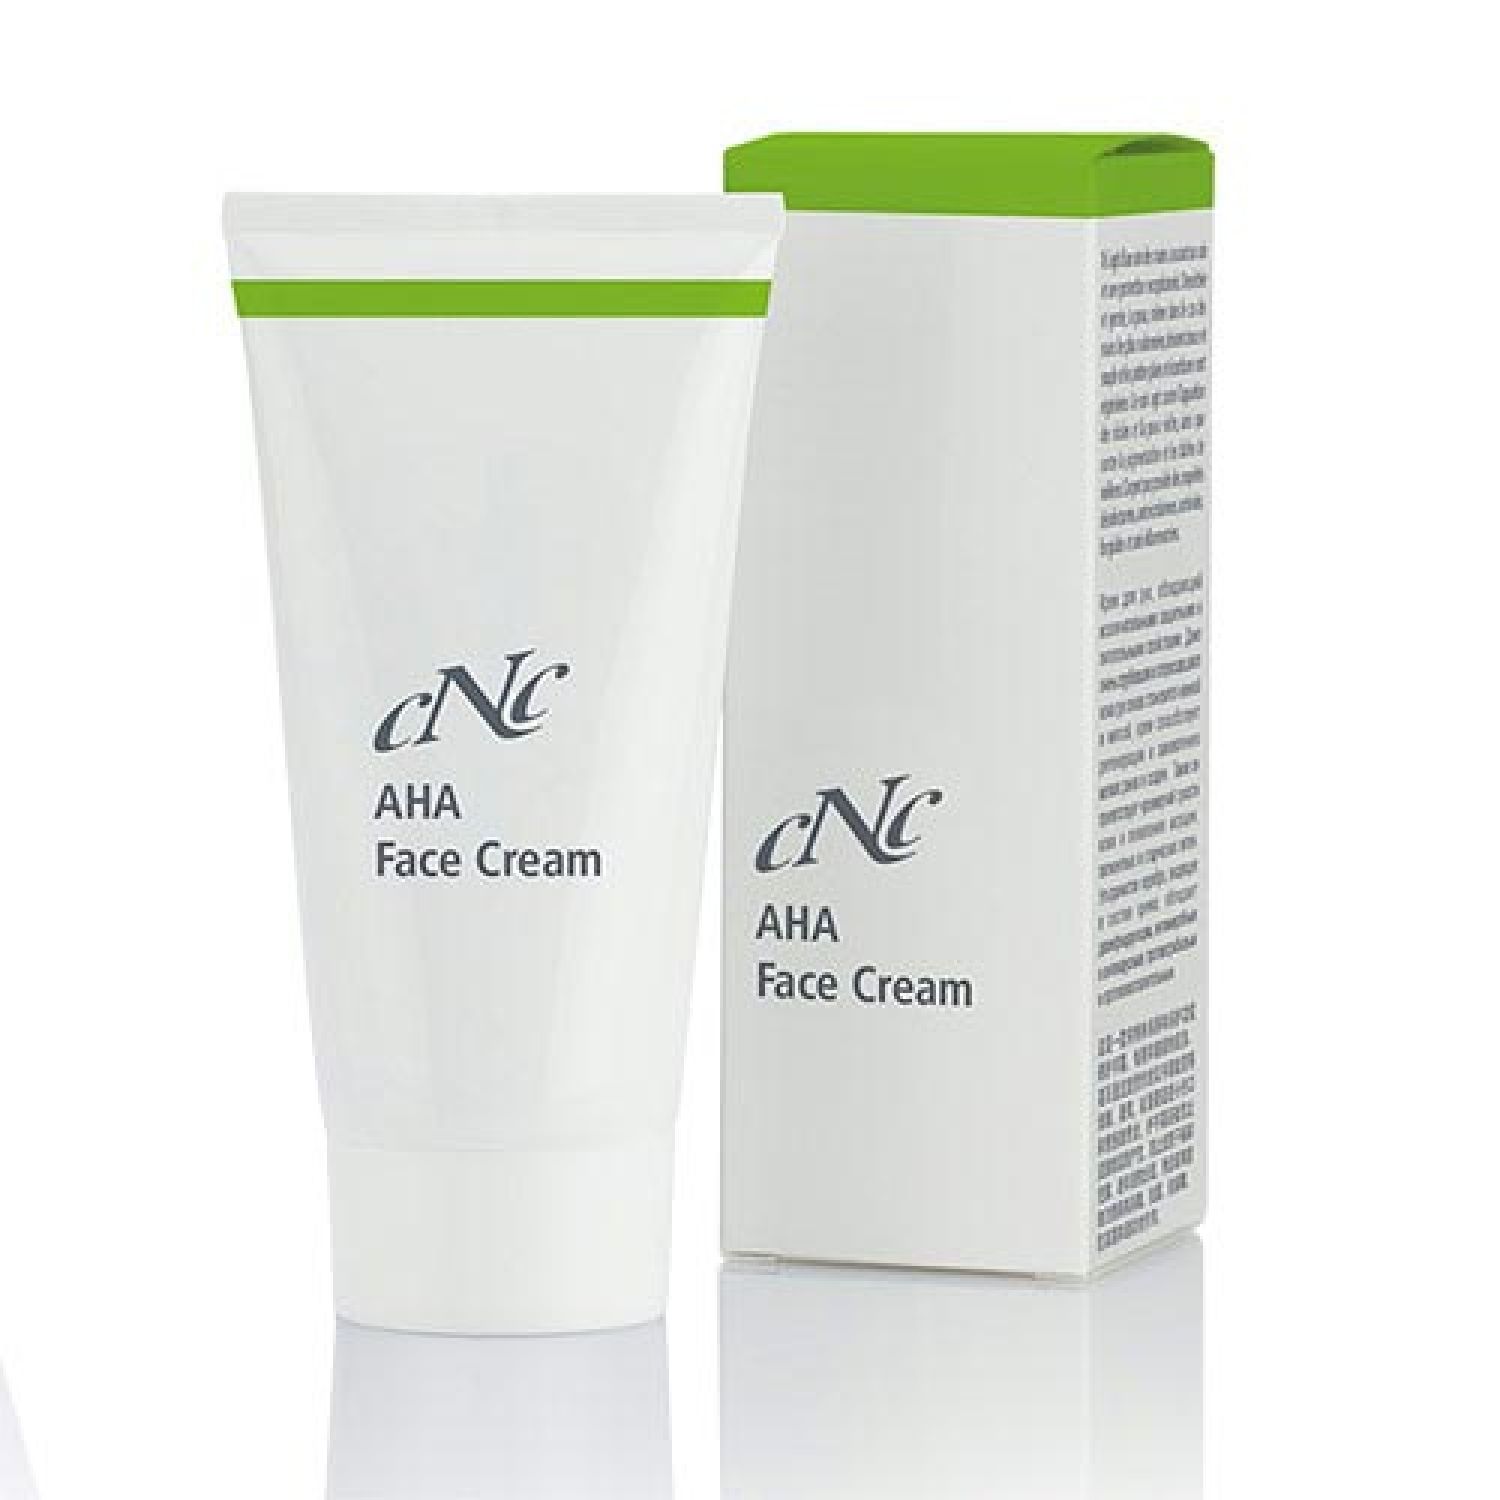 CNC cosmetic fruit appeel AHA Face Cream